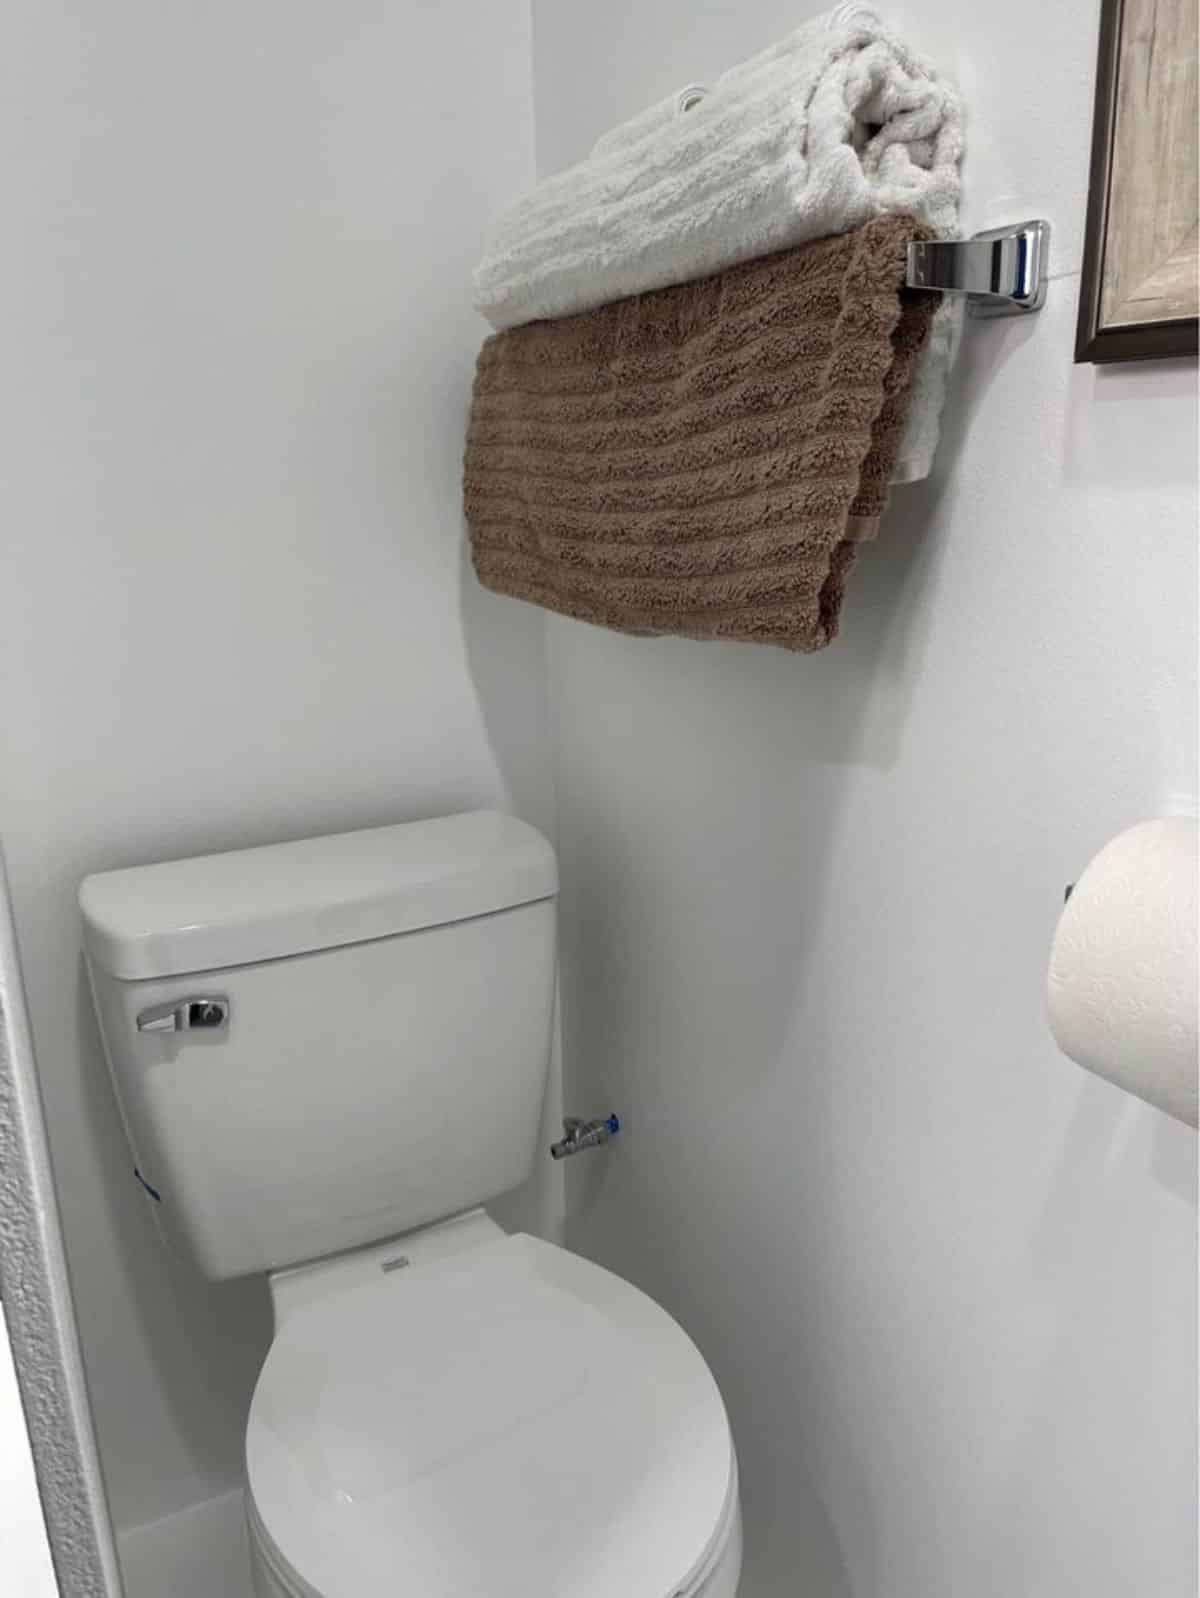 Standard toilet with towel in rack